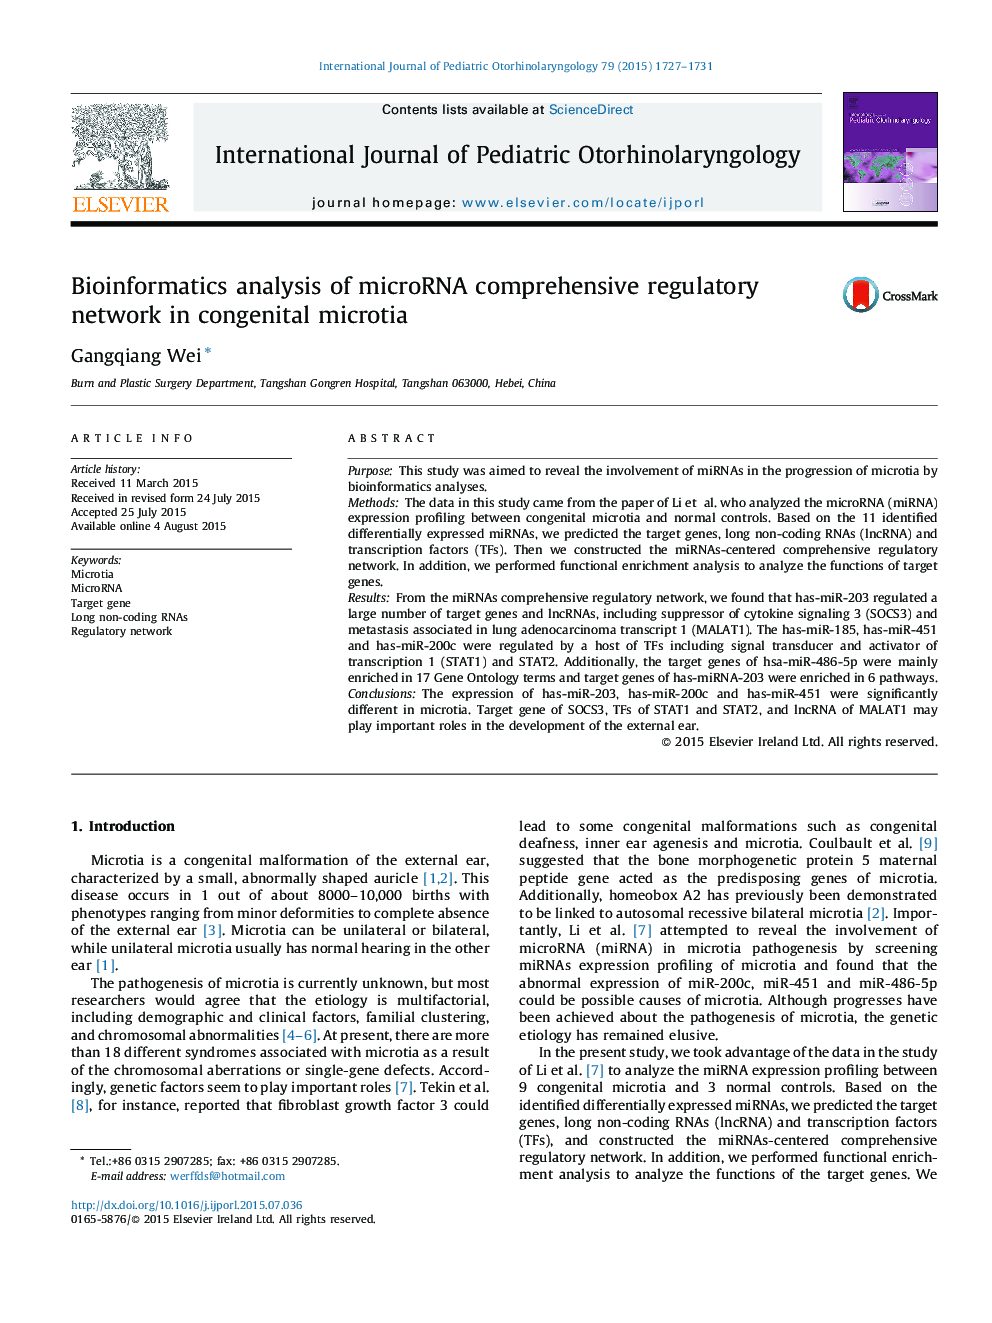 Bioinformatics analysis of microRNA comprehensive regulatory network in congenital microtia